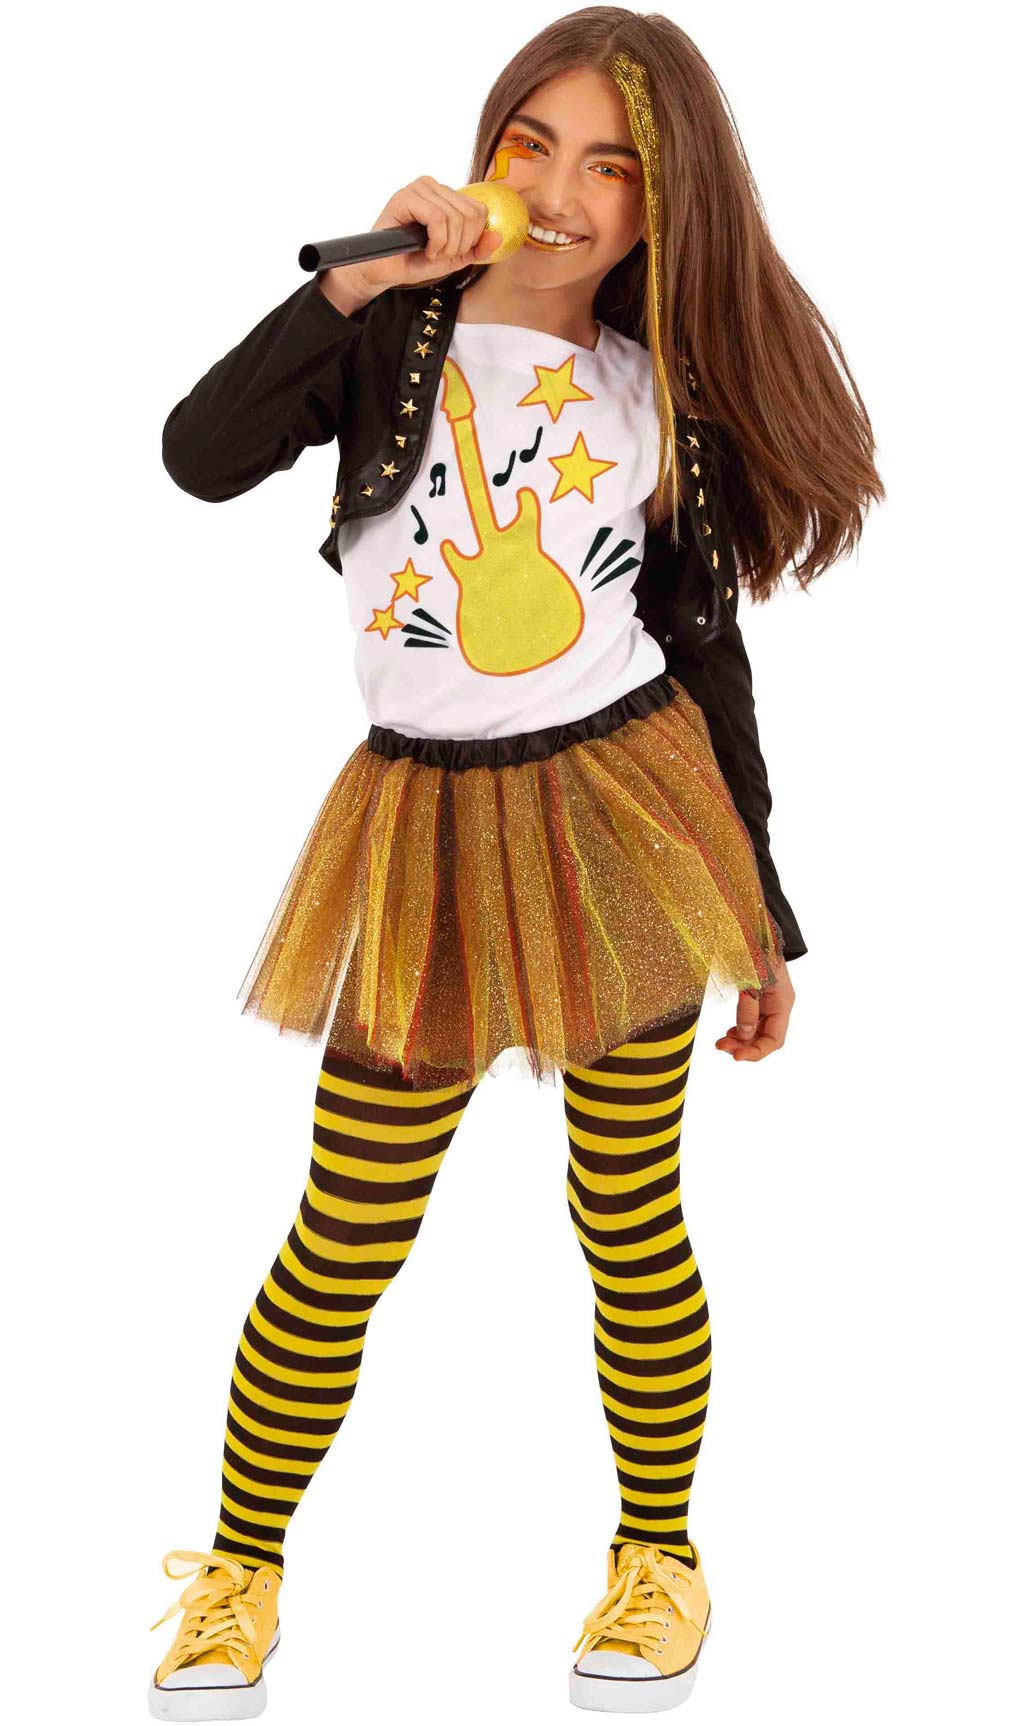 Costume da Pop Star Roxy C. per bambine